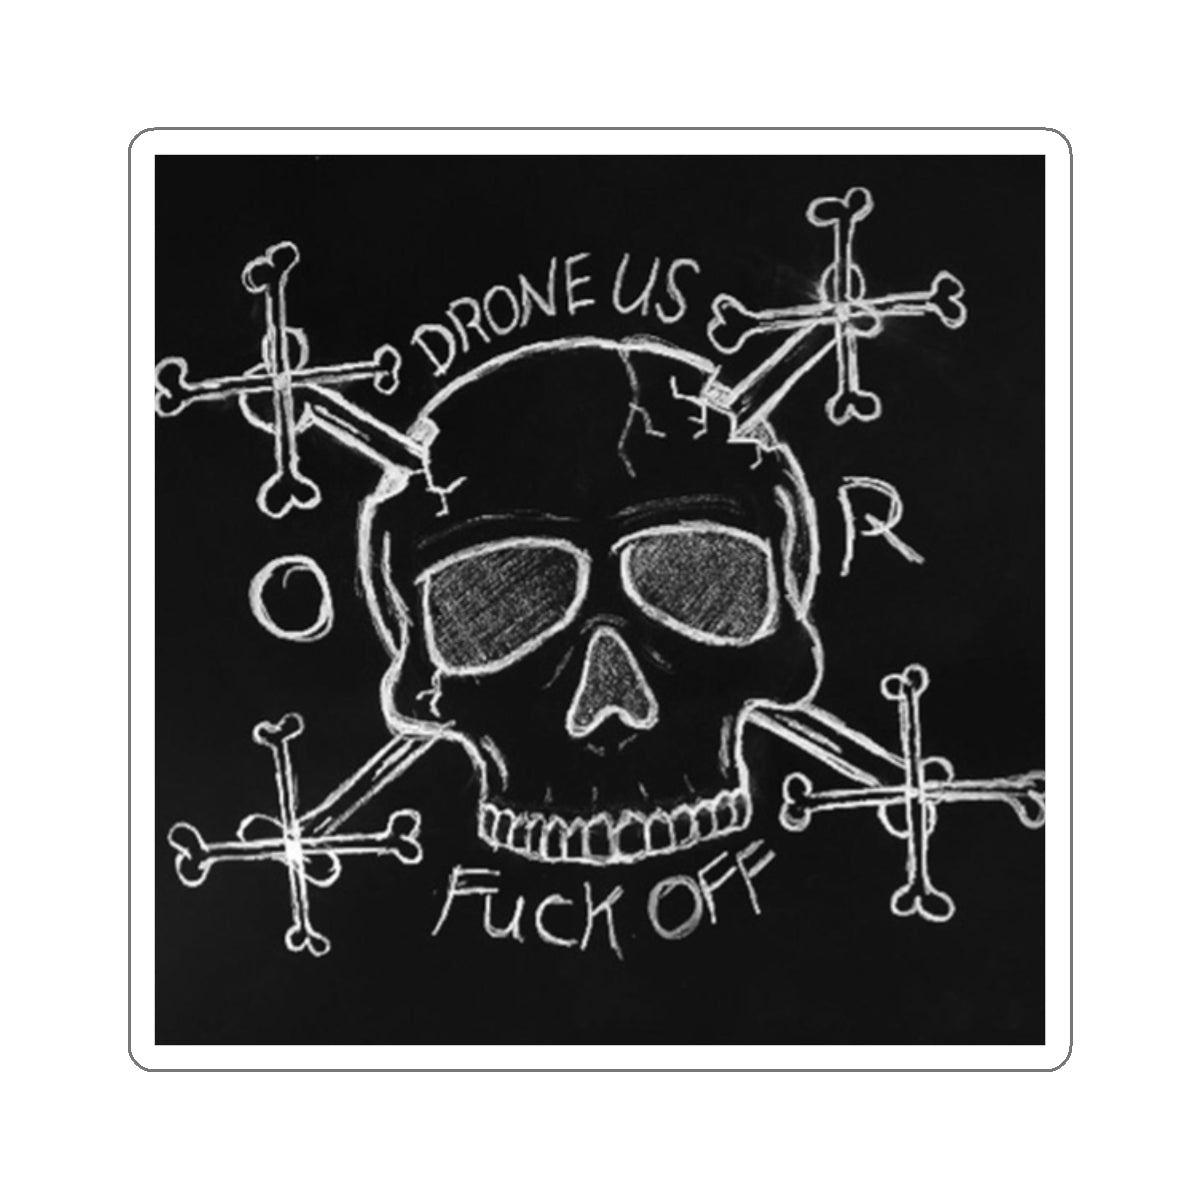 "Drone us, or Fuck off" sticker